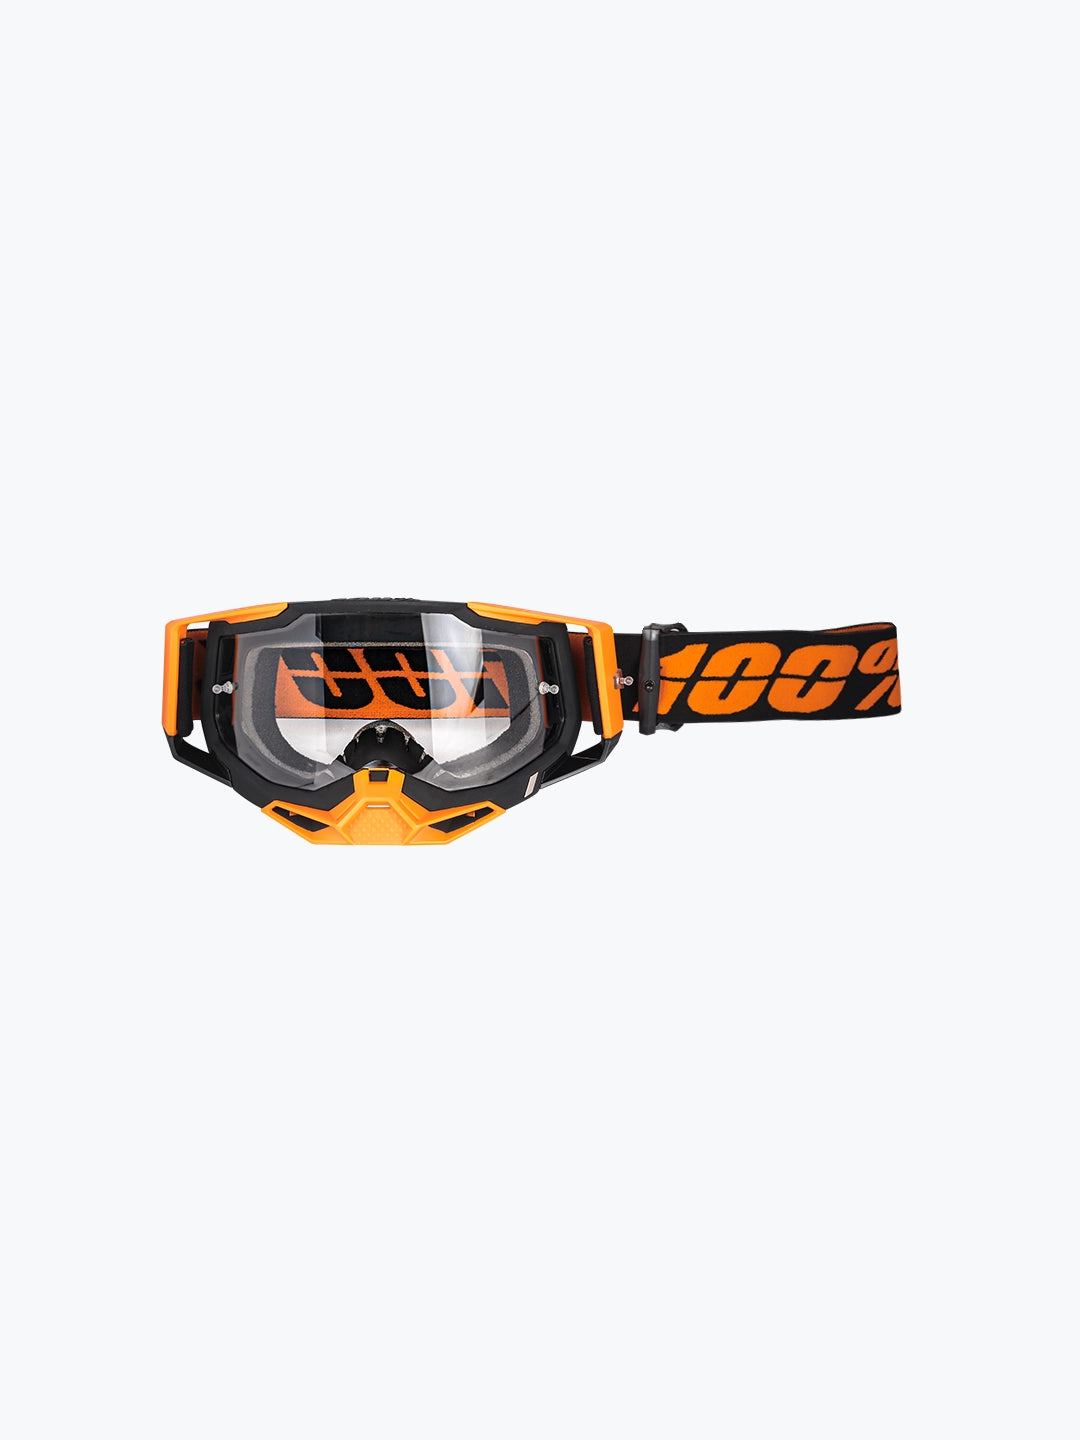 Goggles 100% - 212 Orange Plain